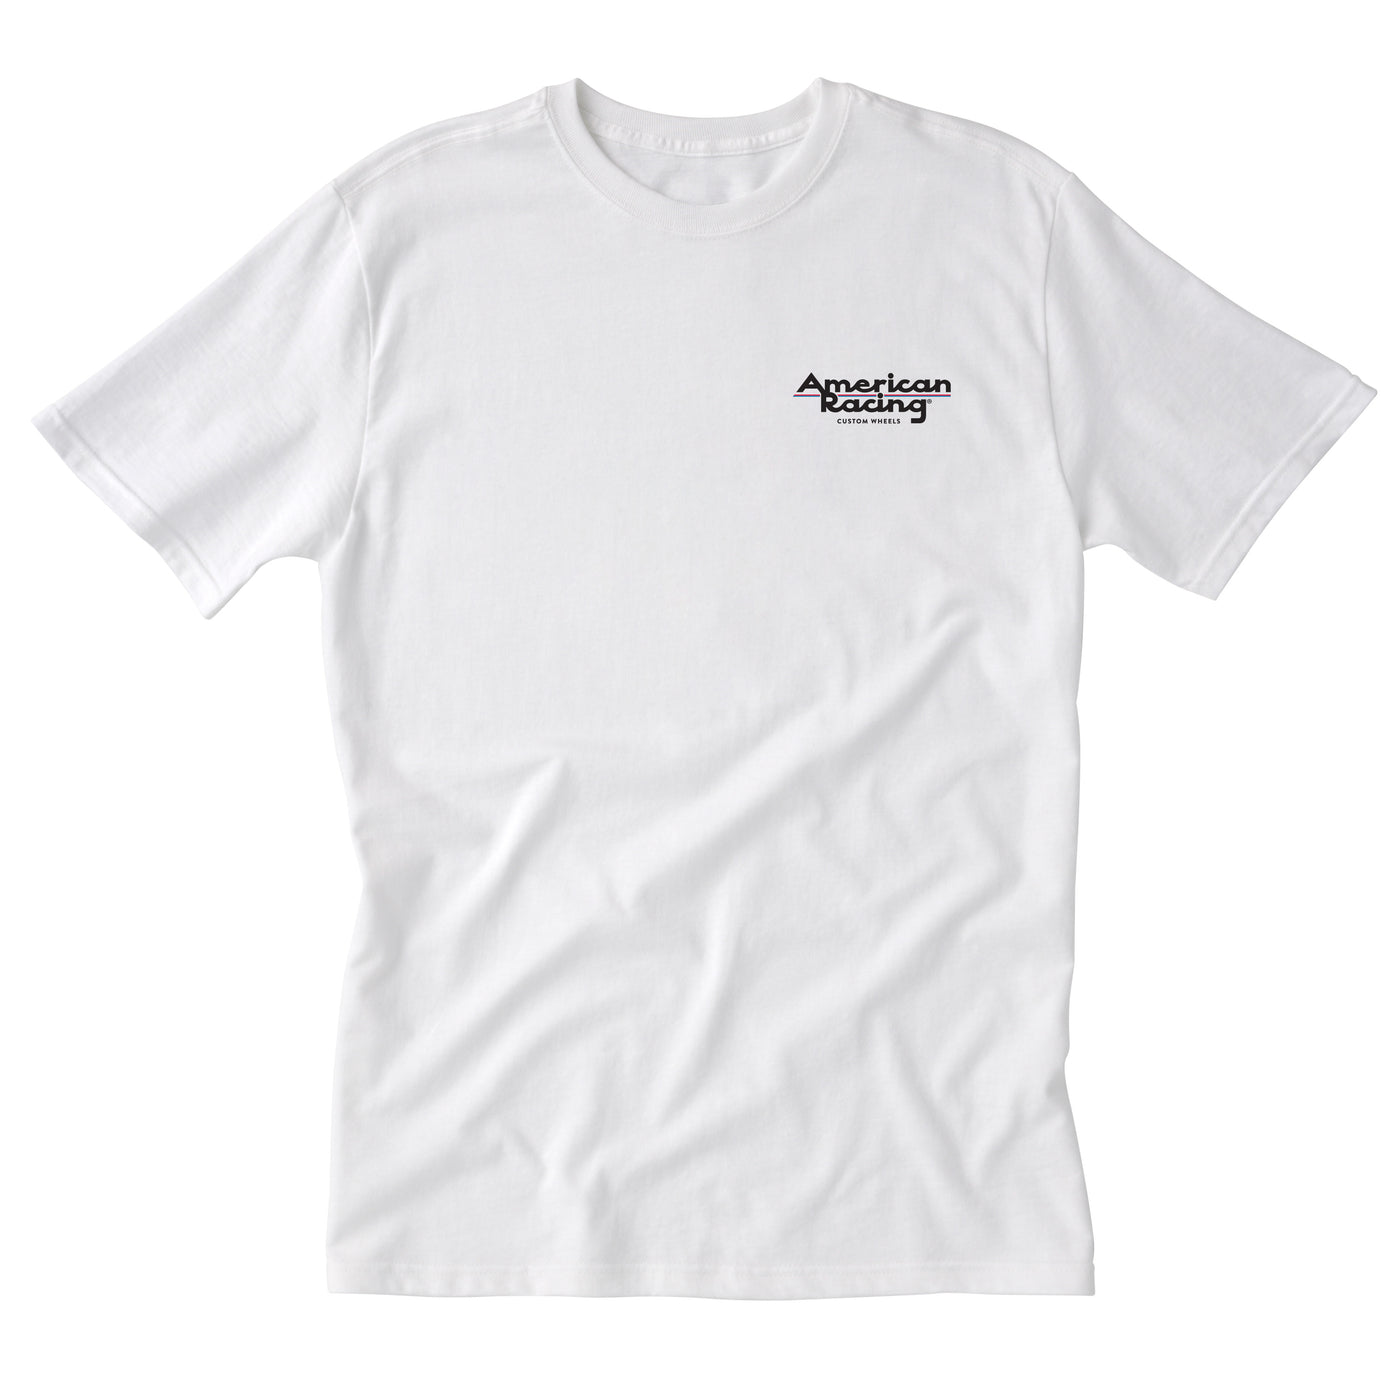 American Racing Logo T-Shirt - White